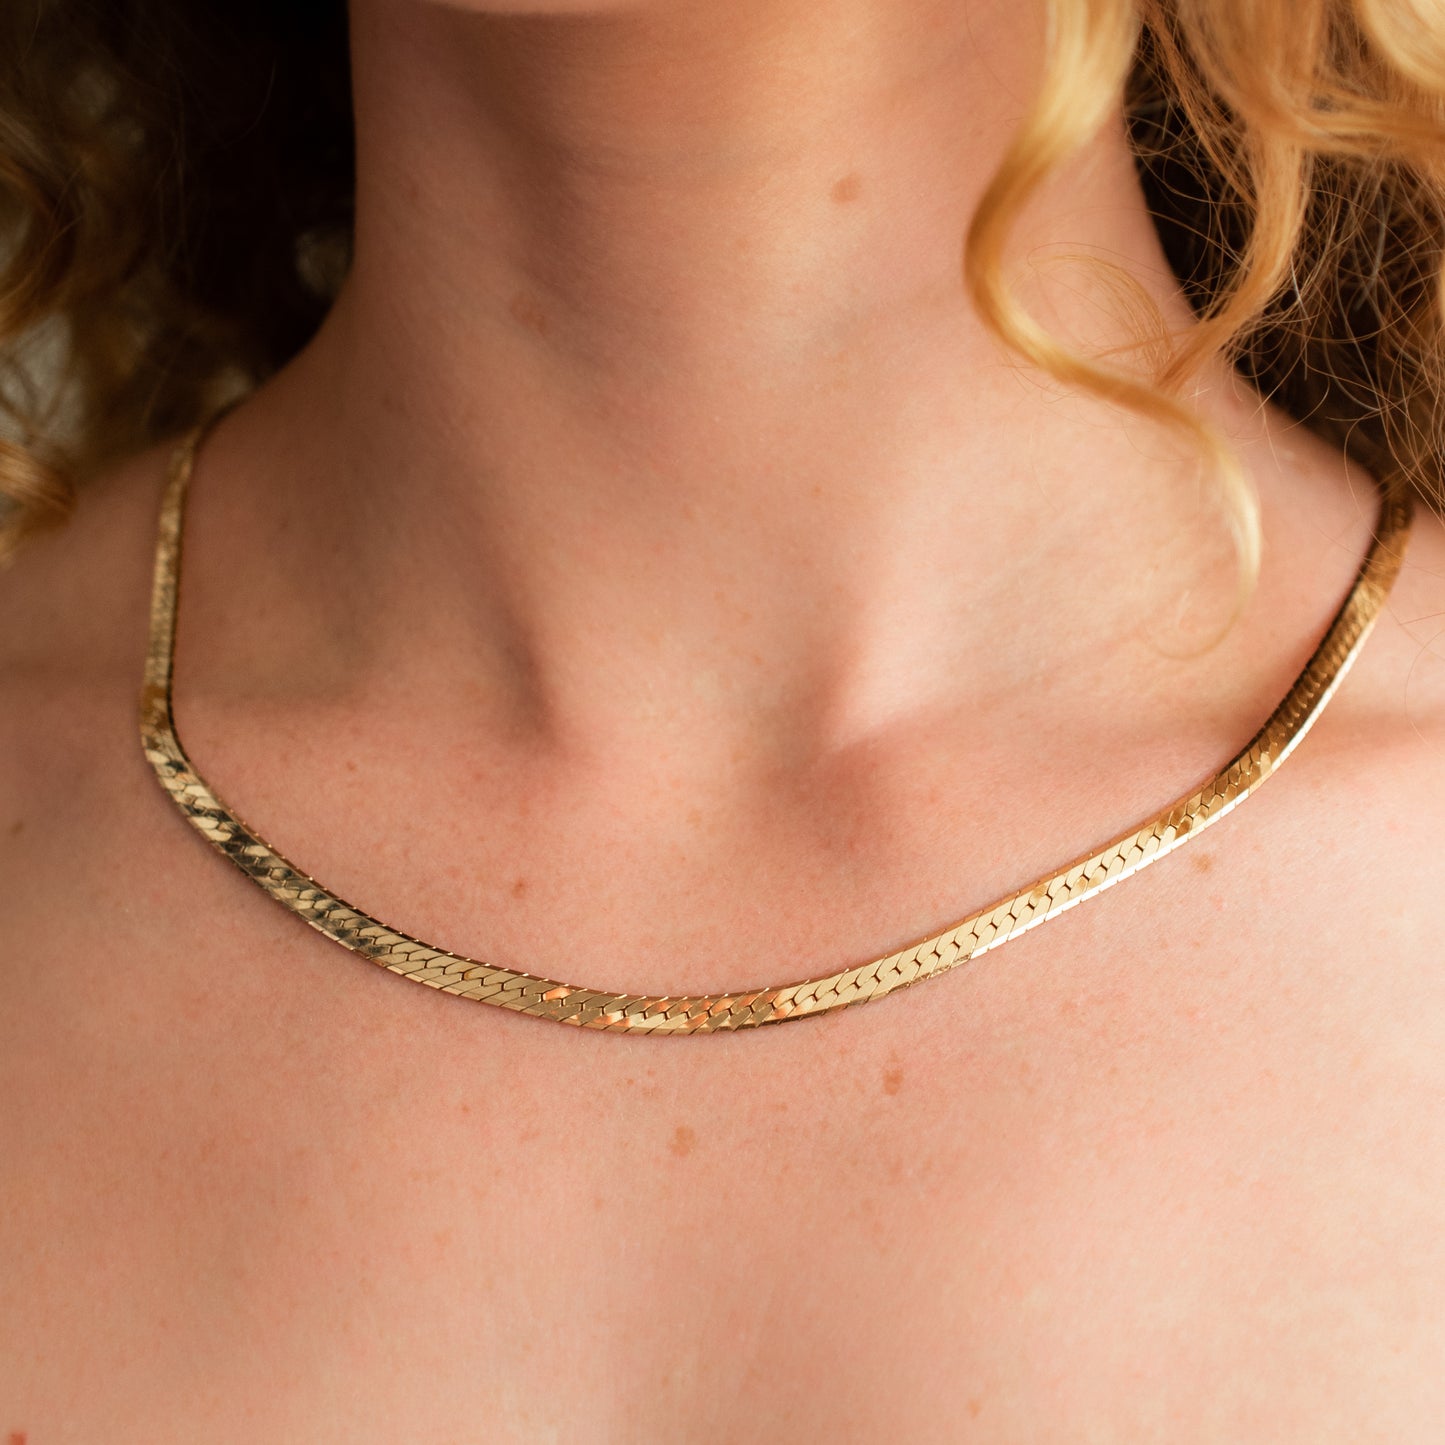 The Long Herringbone Necklace